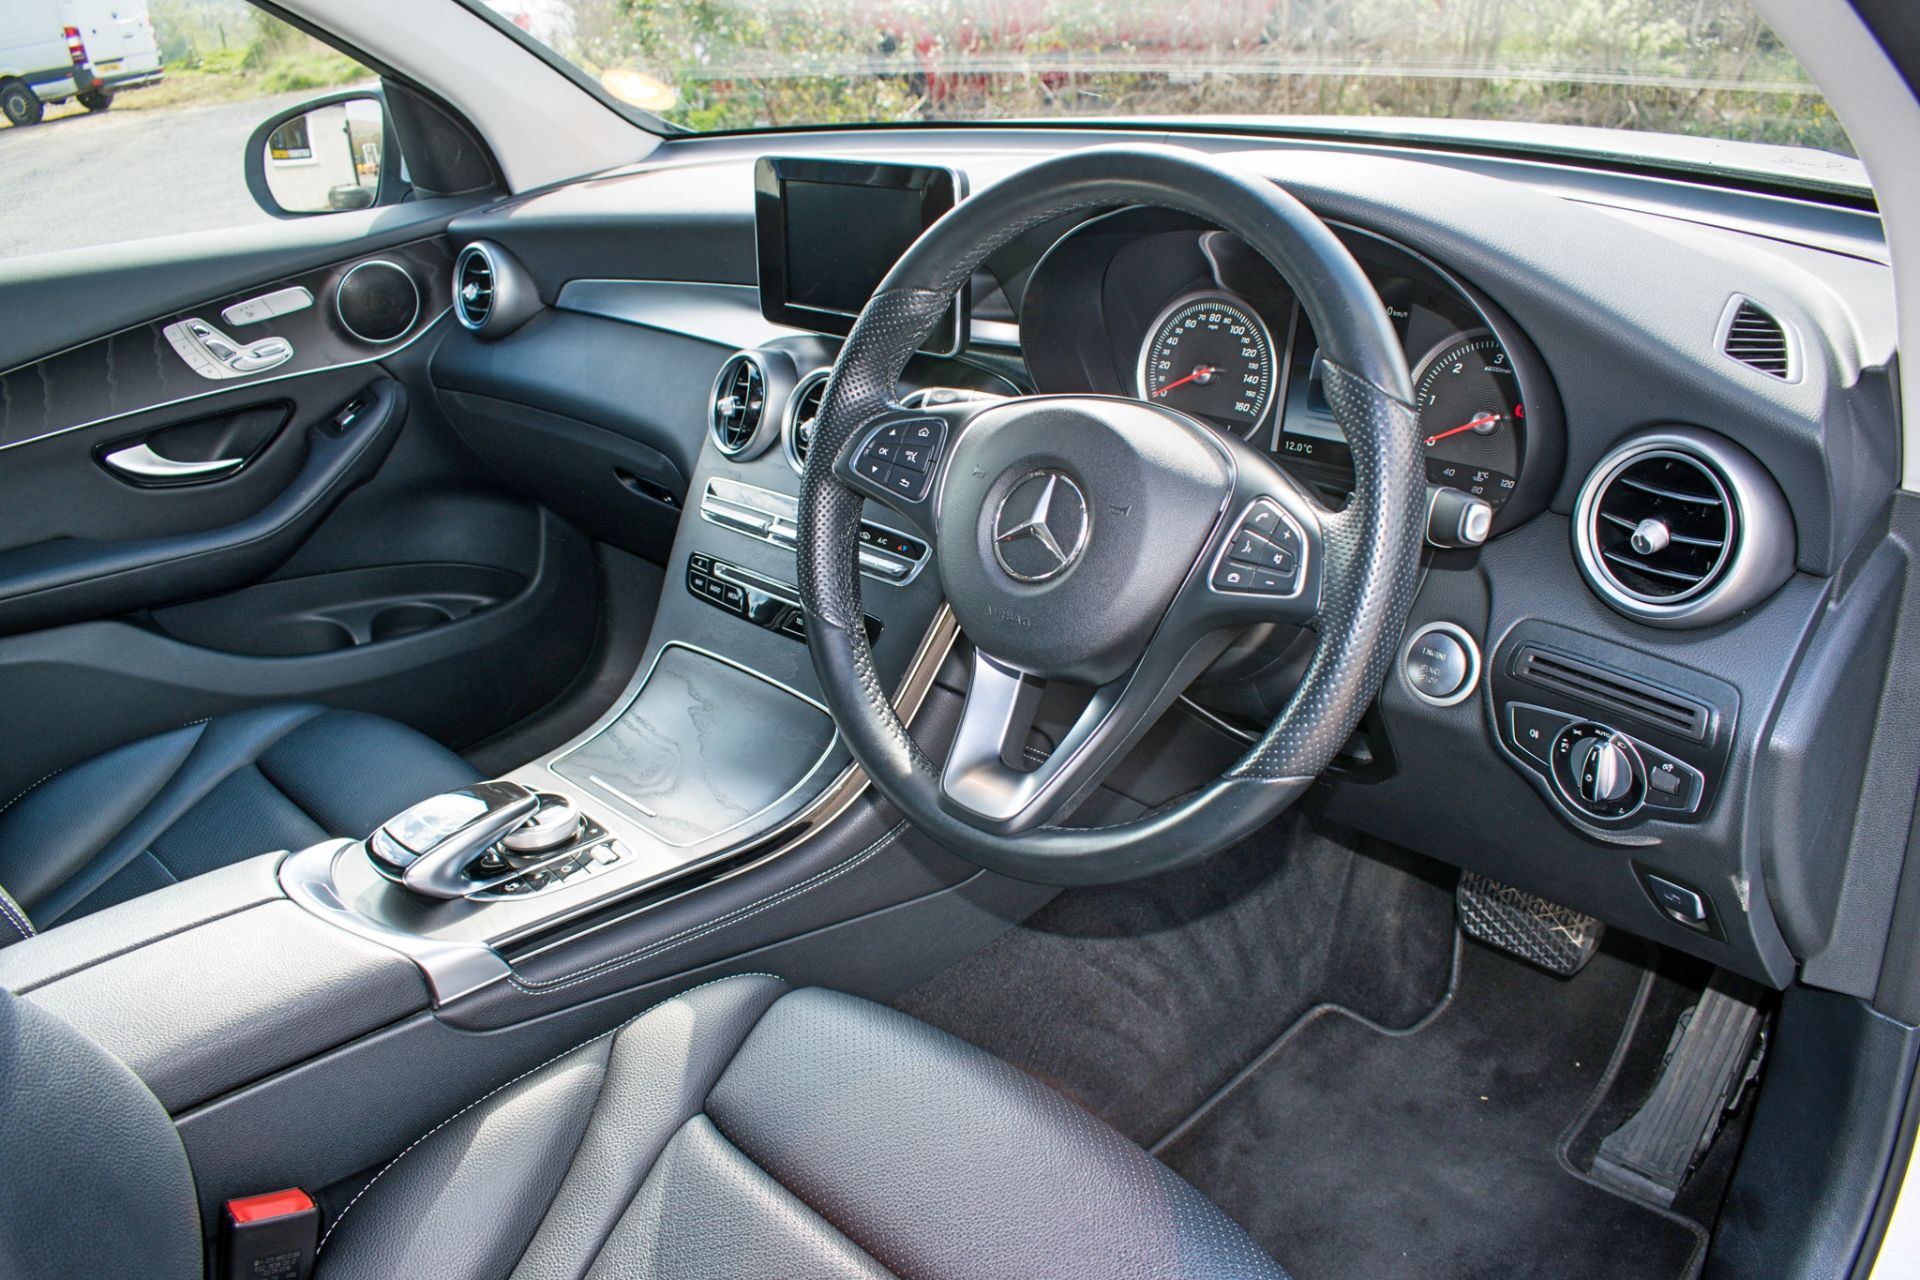 Mercedes Benz GLC220d Sport Premium 5 door estate SUV Registration Number: MK66 NBO Date of - Bild 7 aus 13